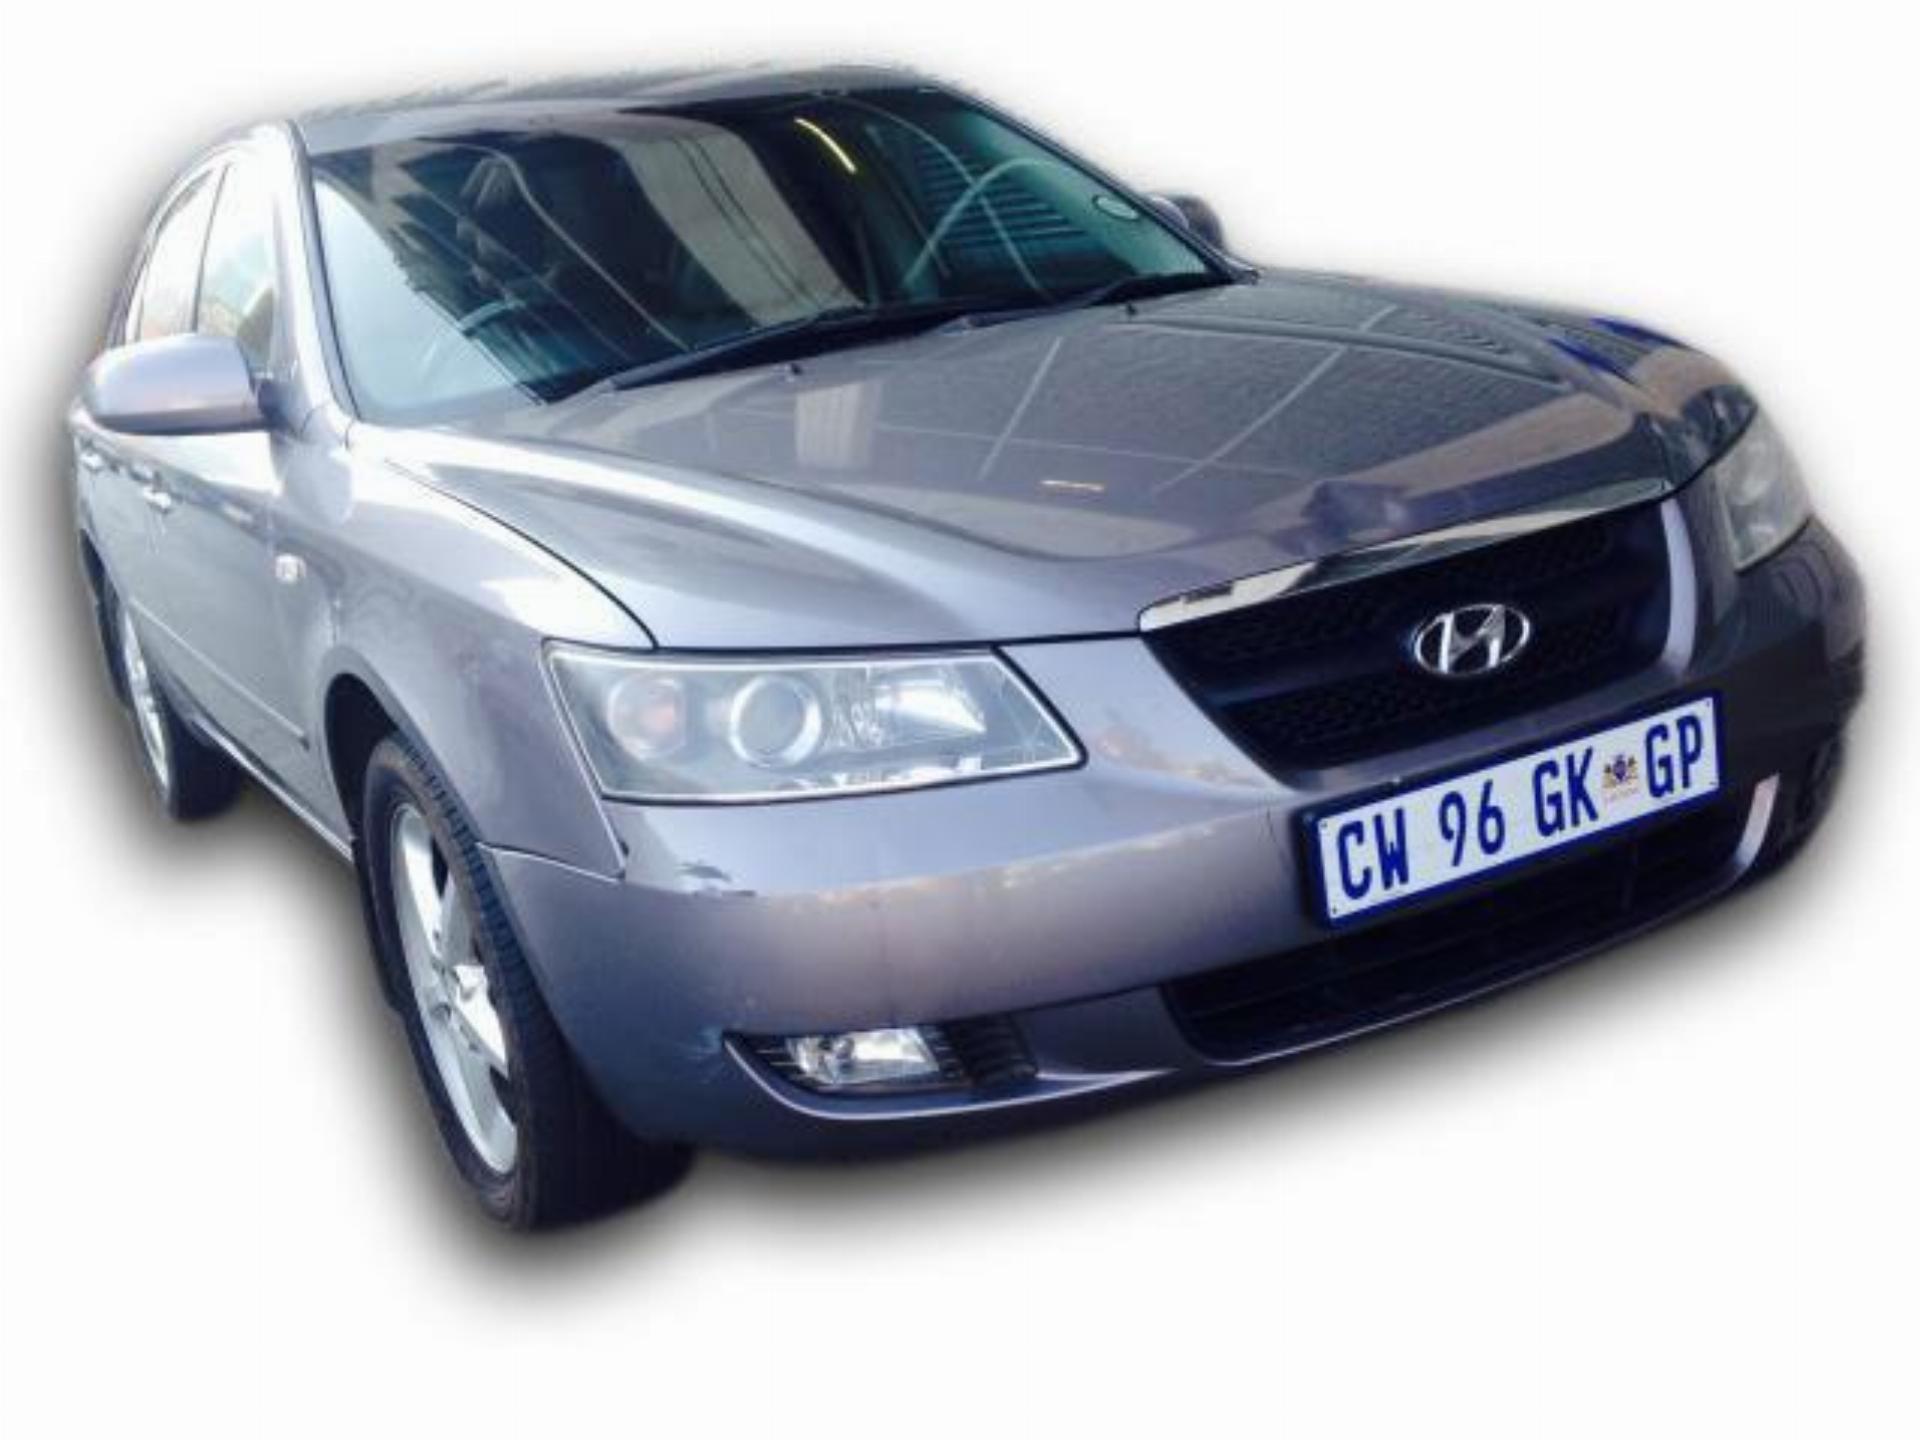 Used Hyundai Sonata 2.4L GLS 2006 on auction - PV1008011